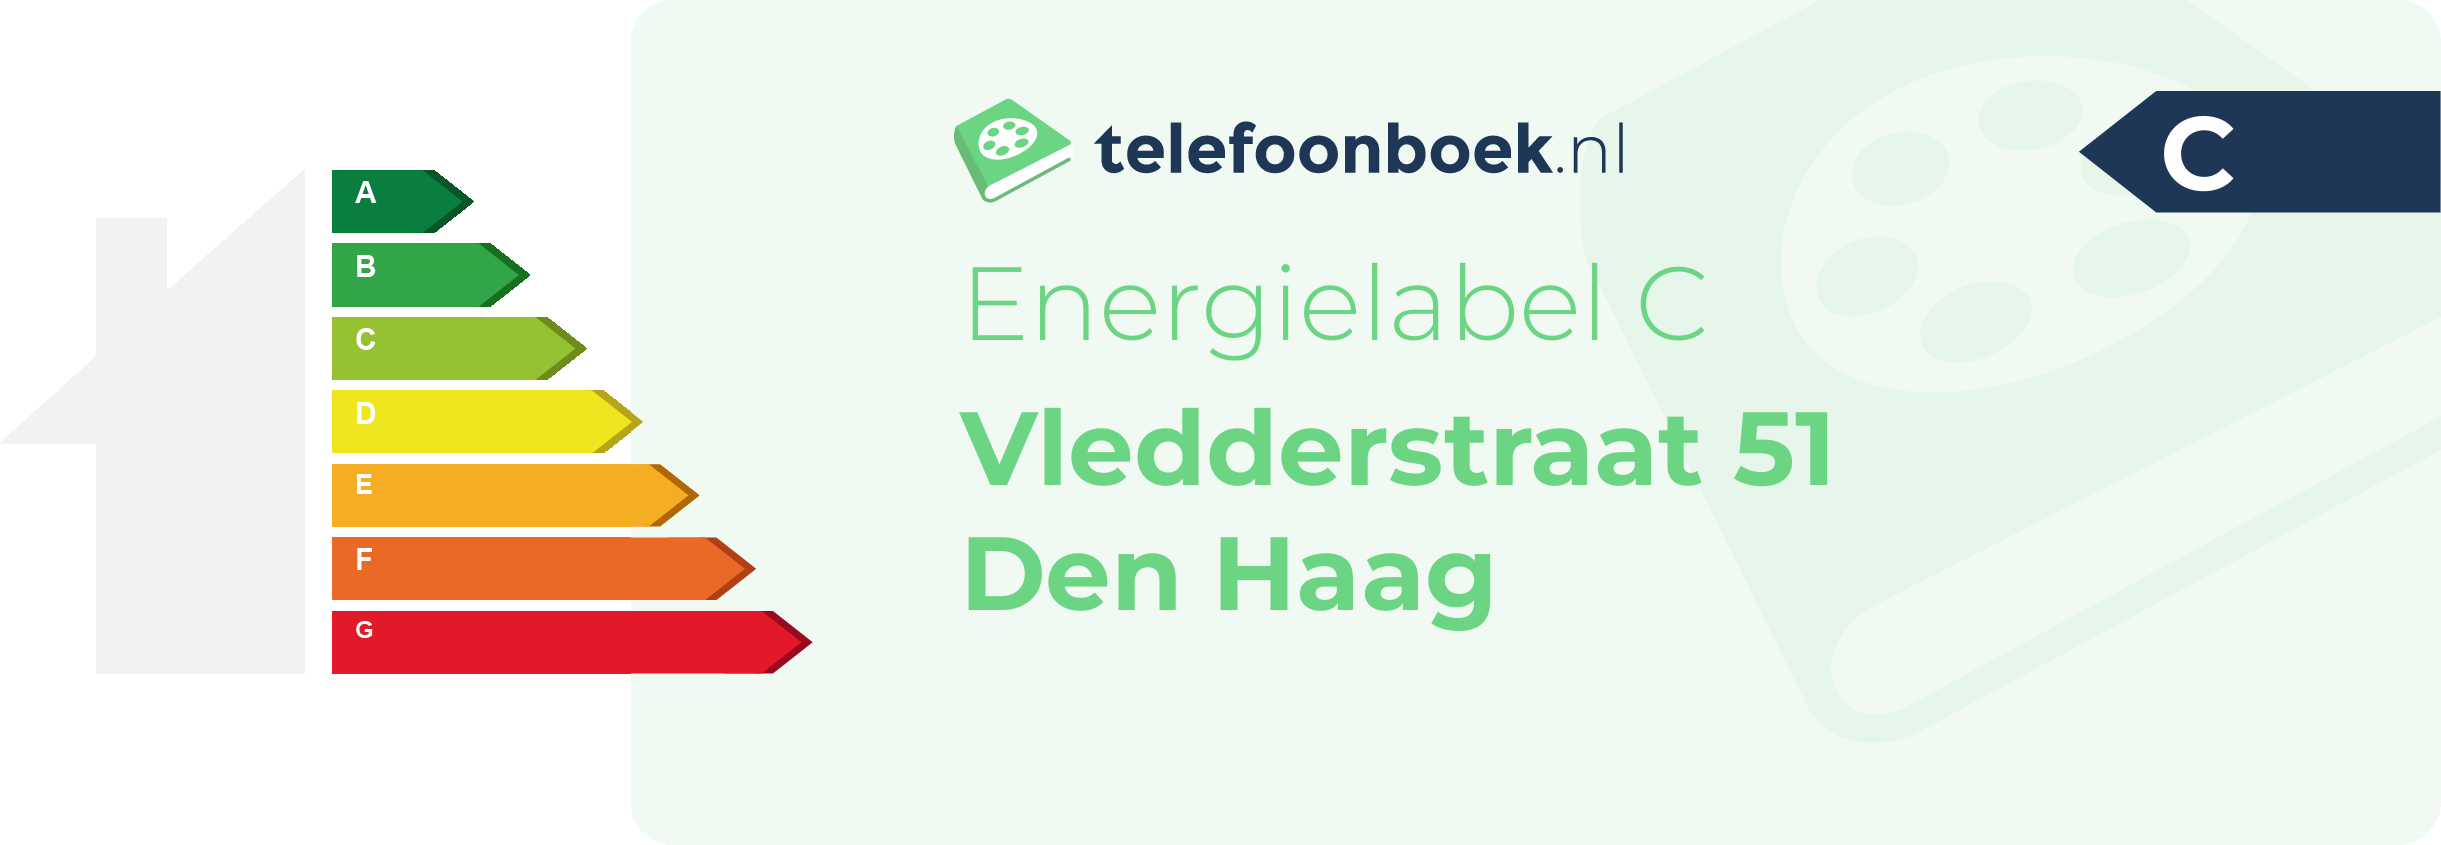 Energielabel Vledderstraat 51 Den Haag